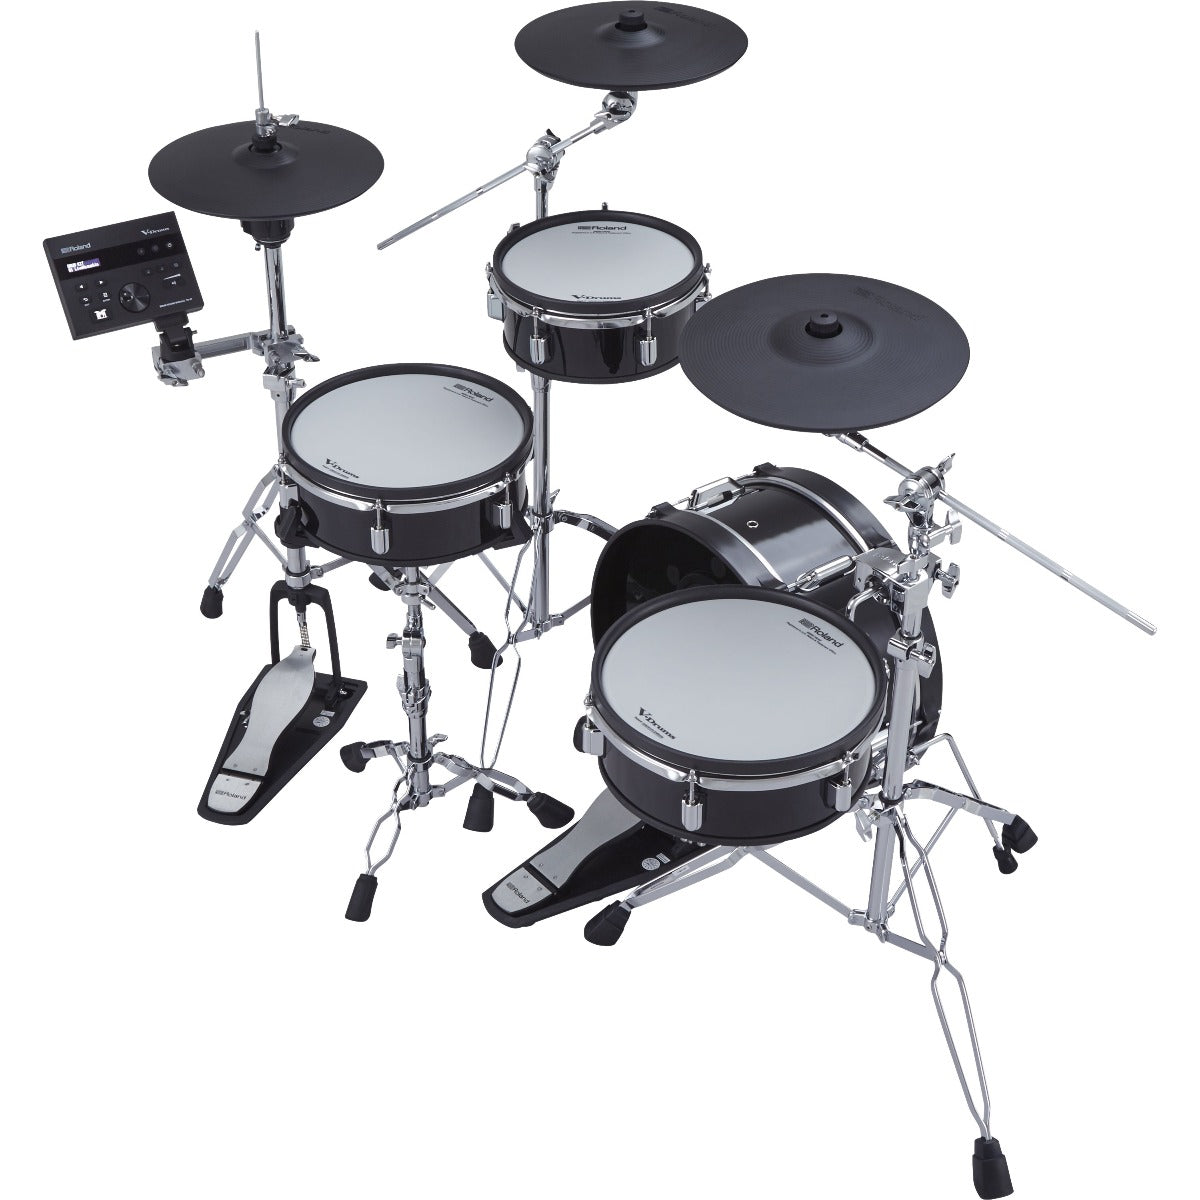 3/4 view of Roland VAD103 V-Drums Acoustic Design 4pc Kit showing top, back and left side